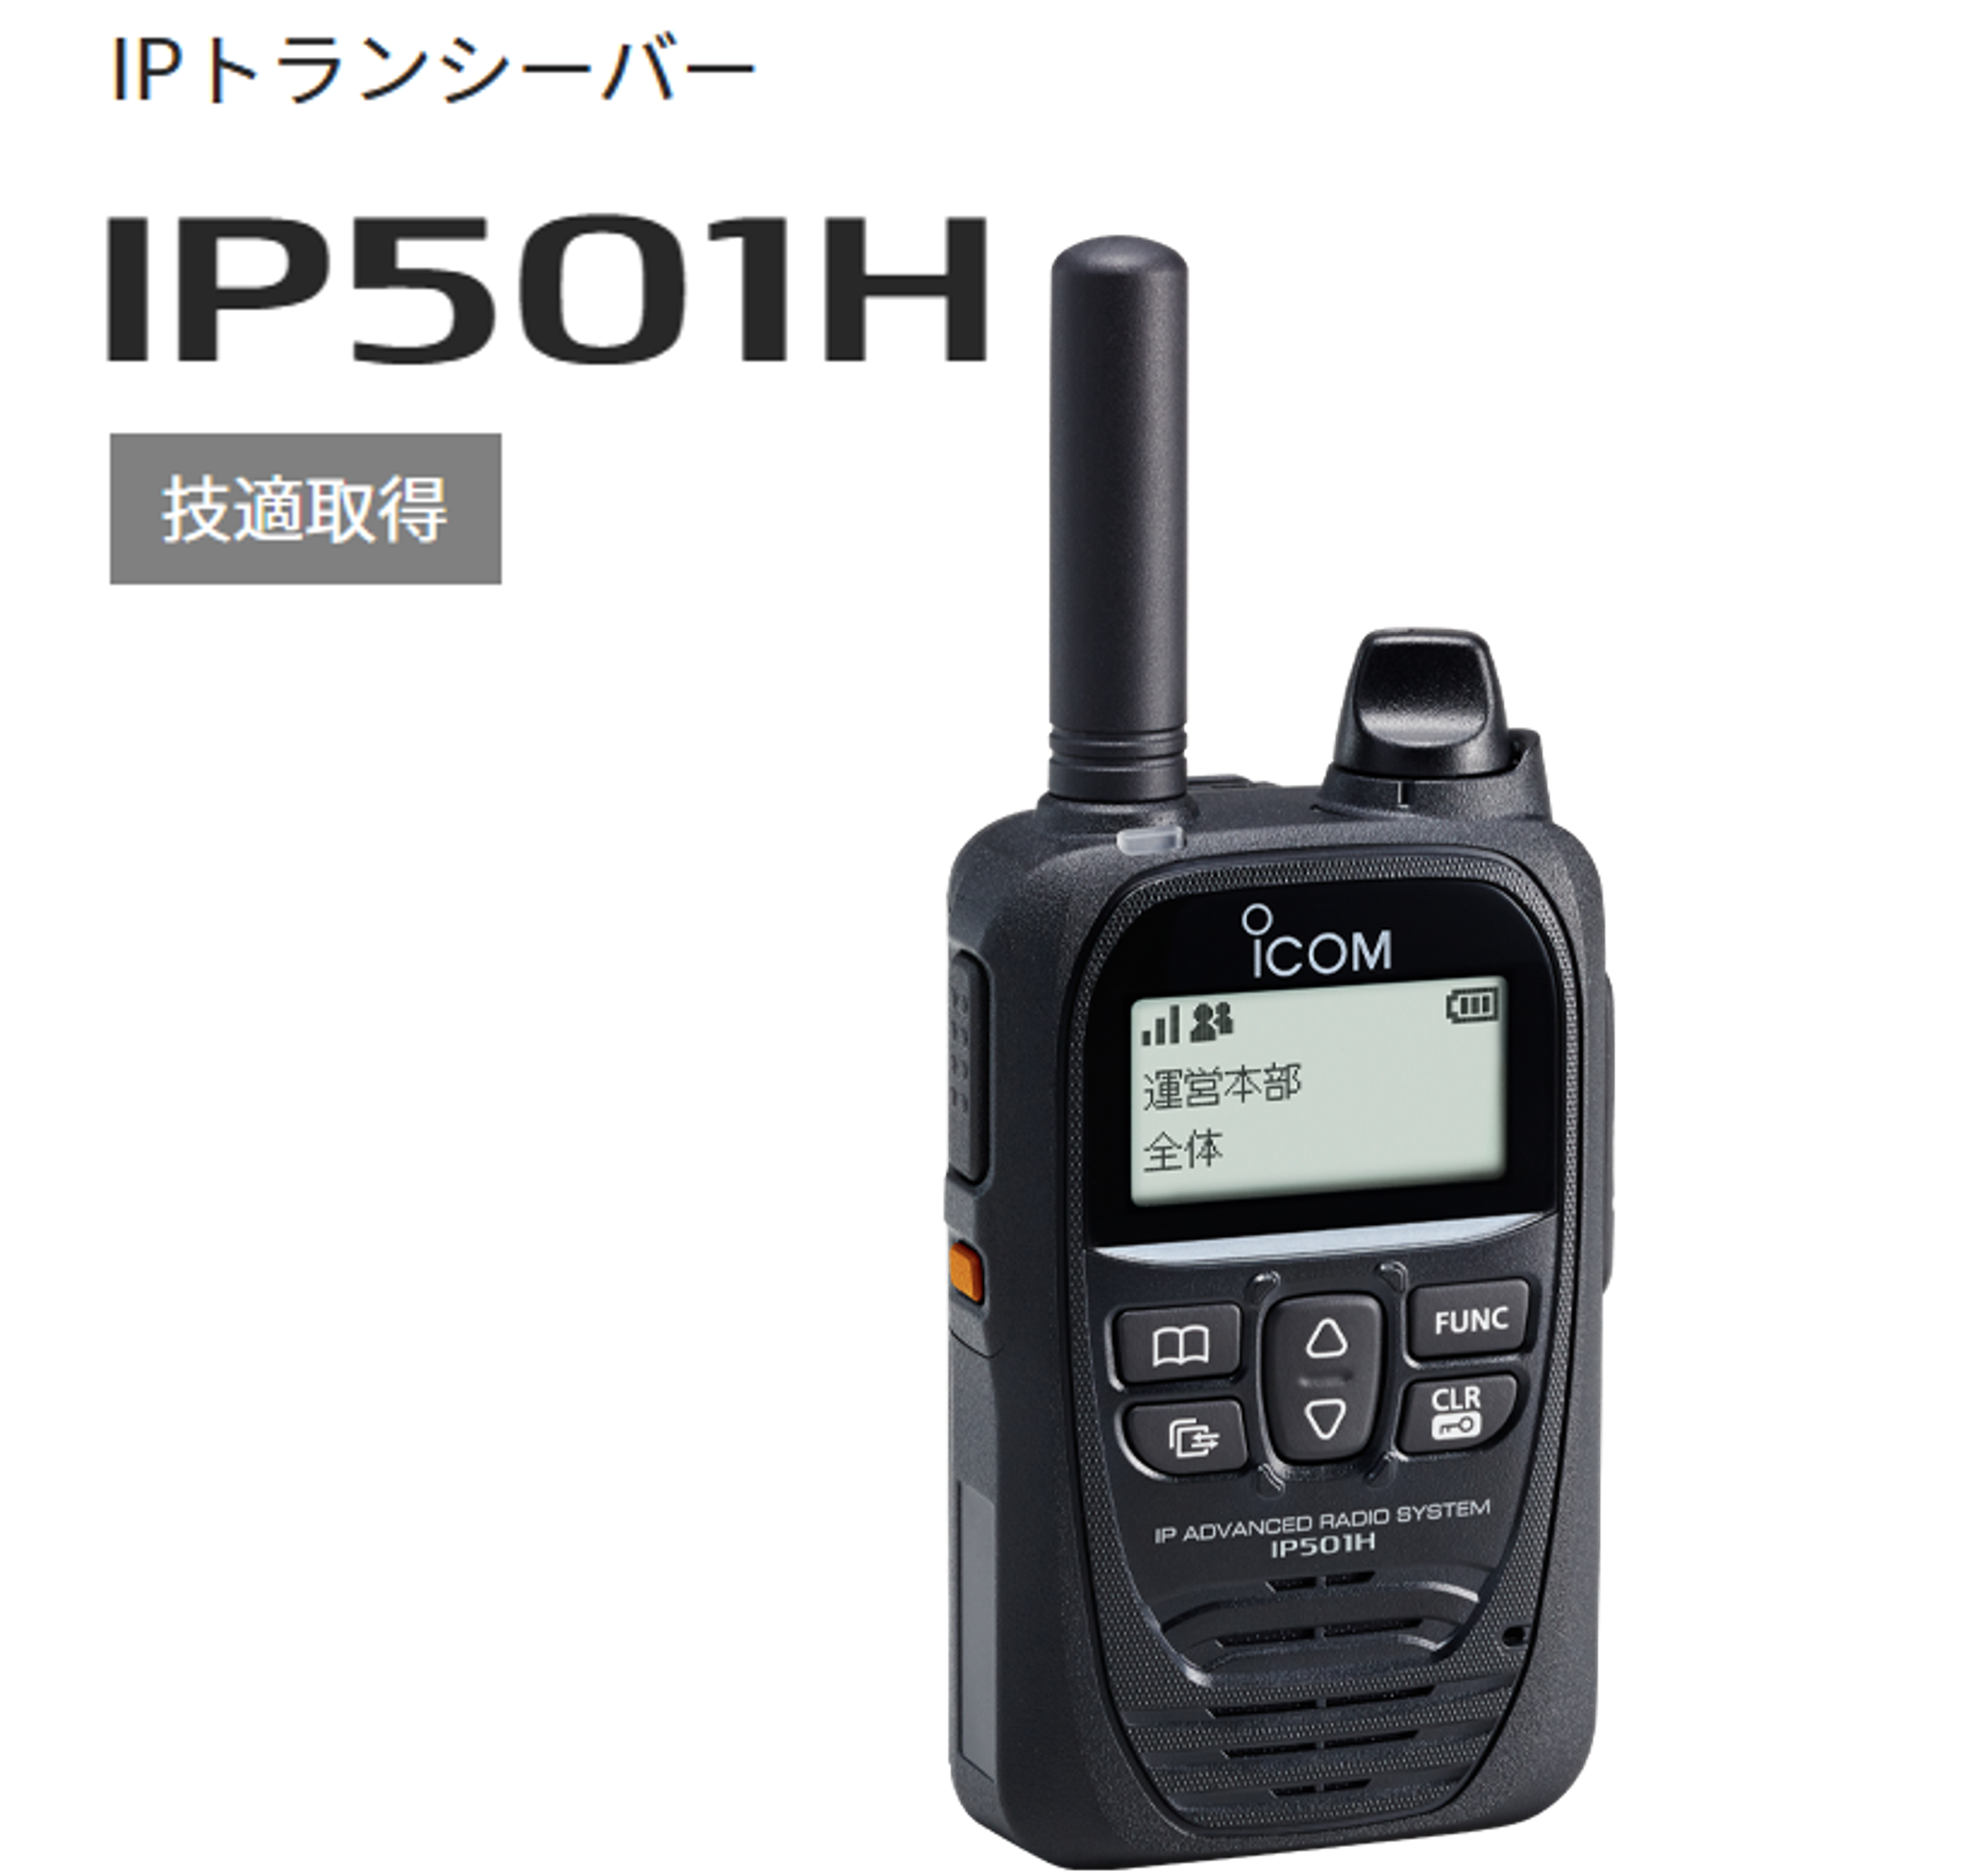 IP501H